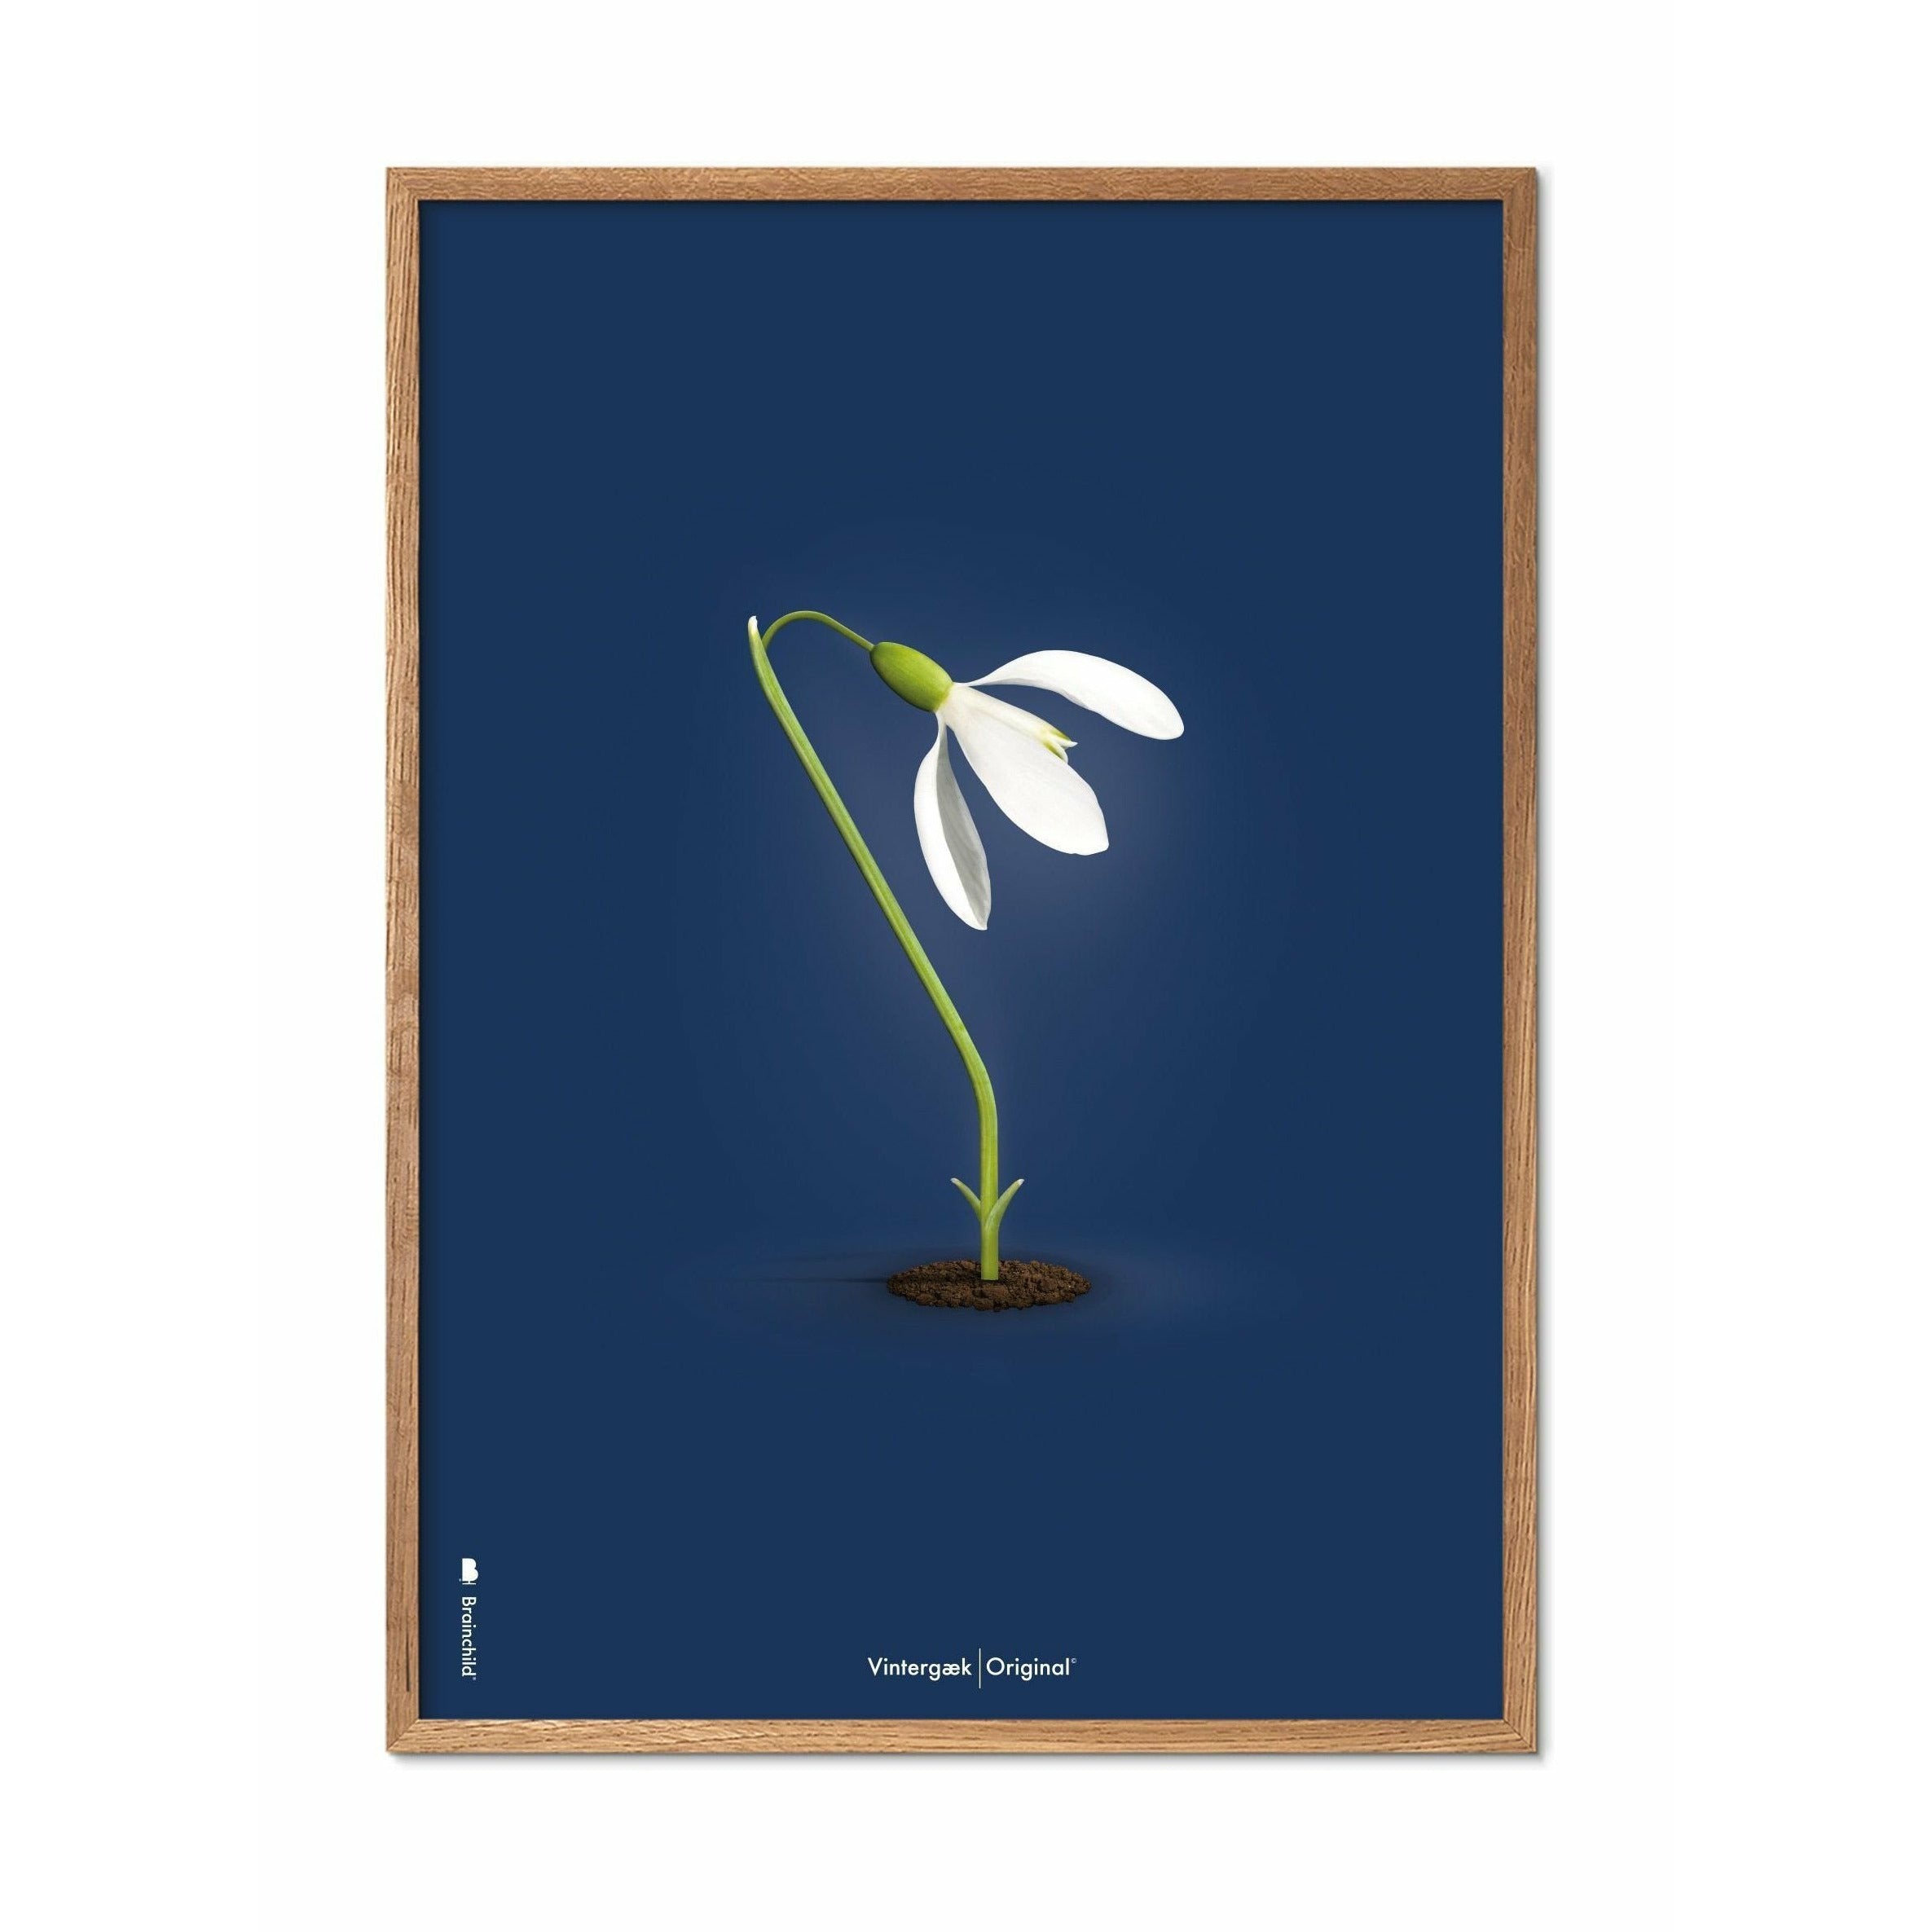 Brainchild Snowdrop Classic Poster, Frame Made Of Light Wood 70x100 Cm, Dark Blue Background